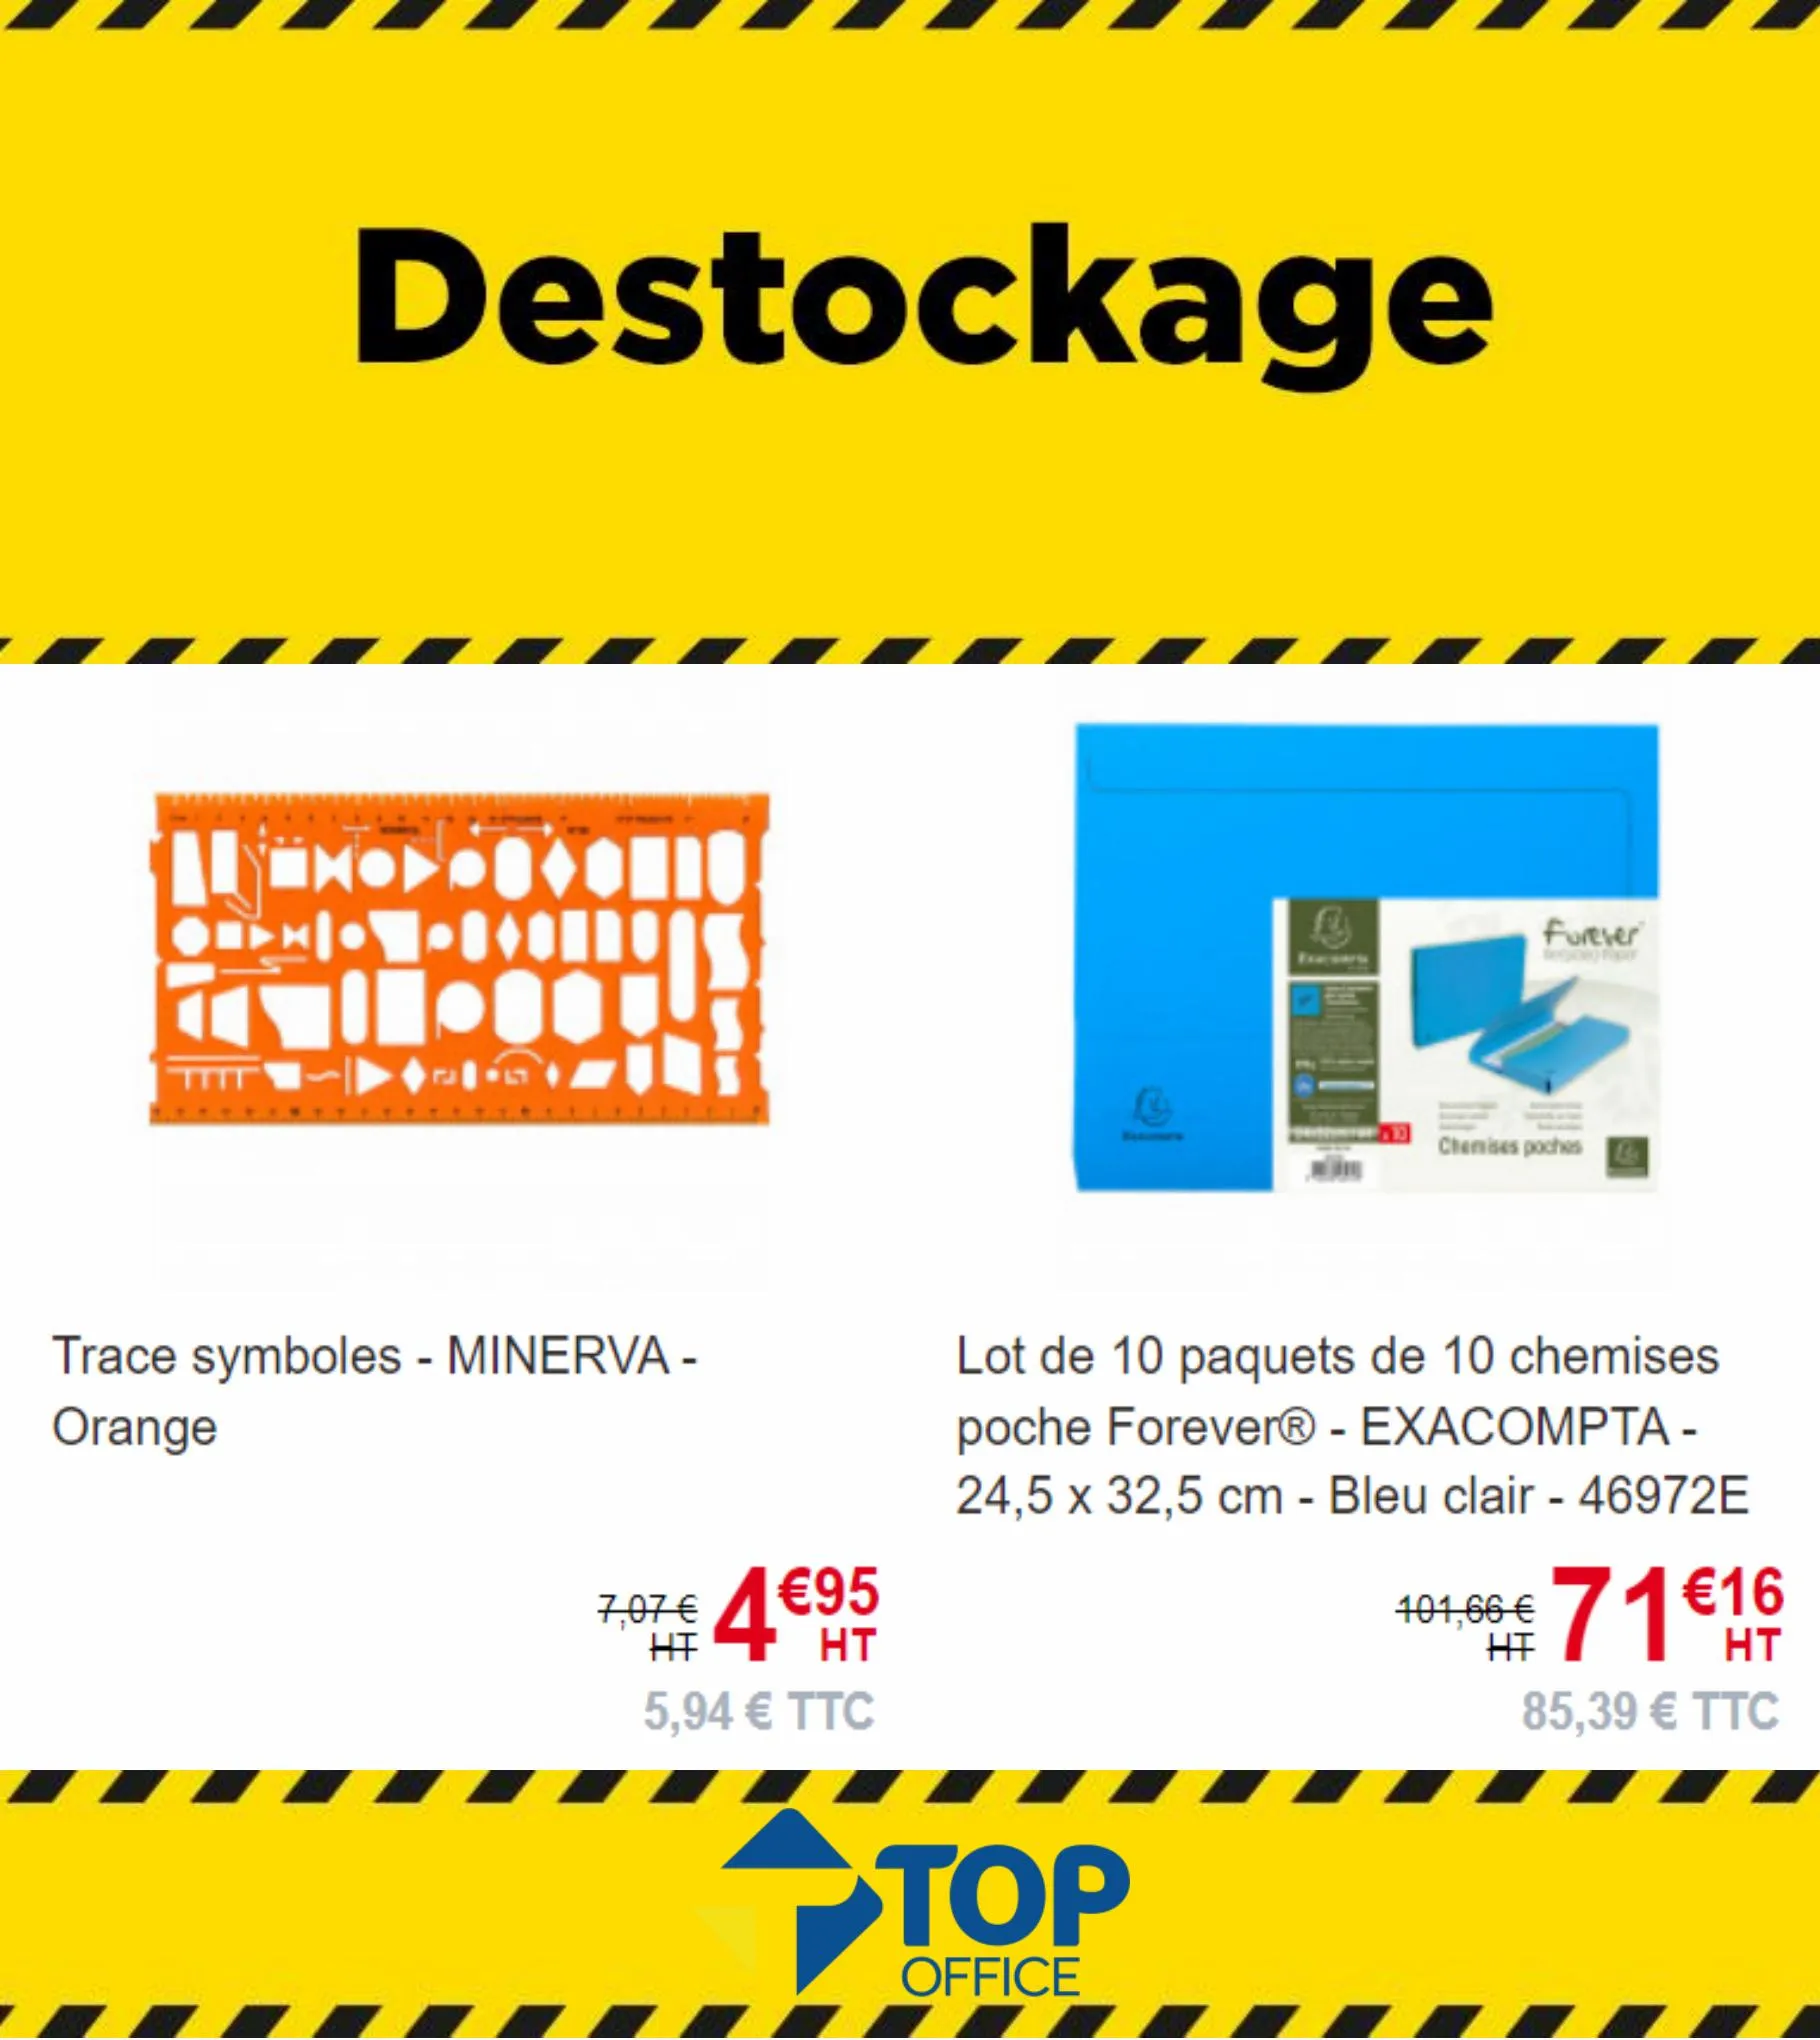 Catalogue Top Office Destockage, page 00007